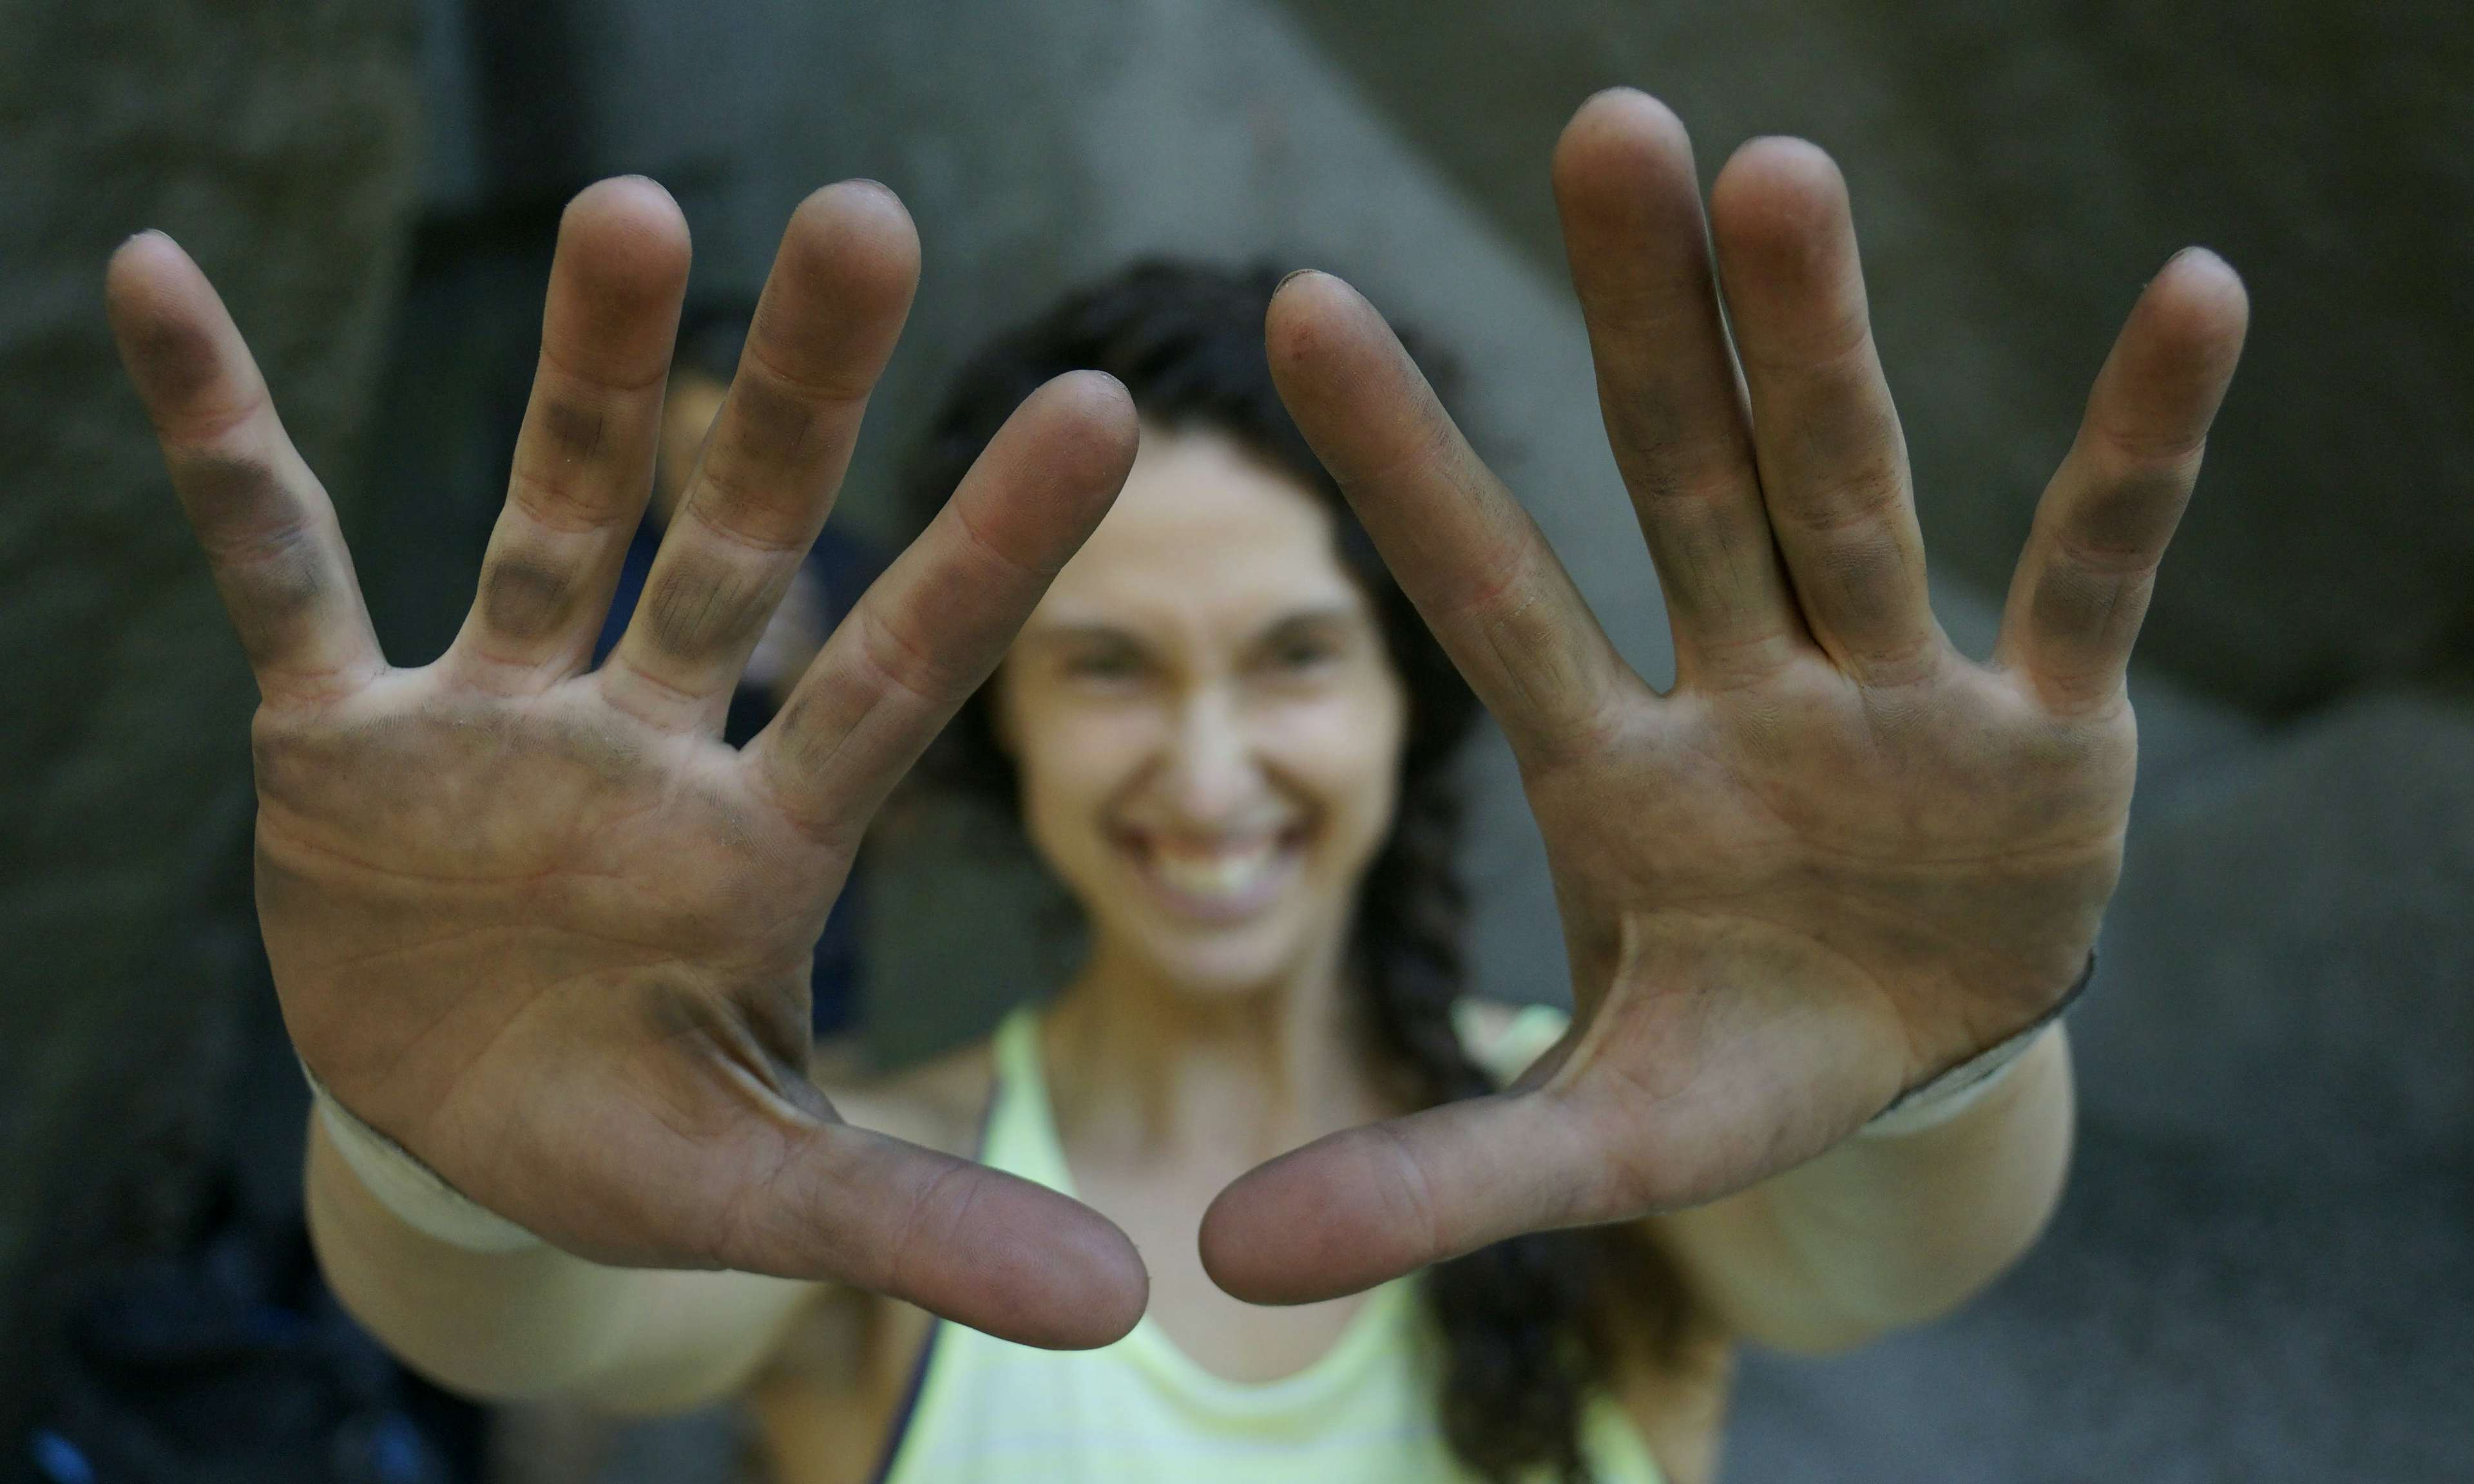 Rock climber showing dirty hands